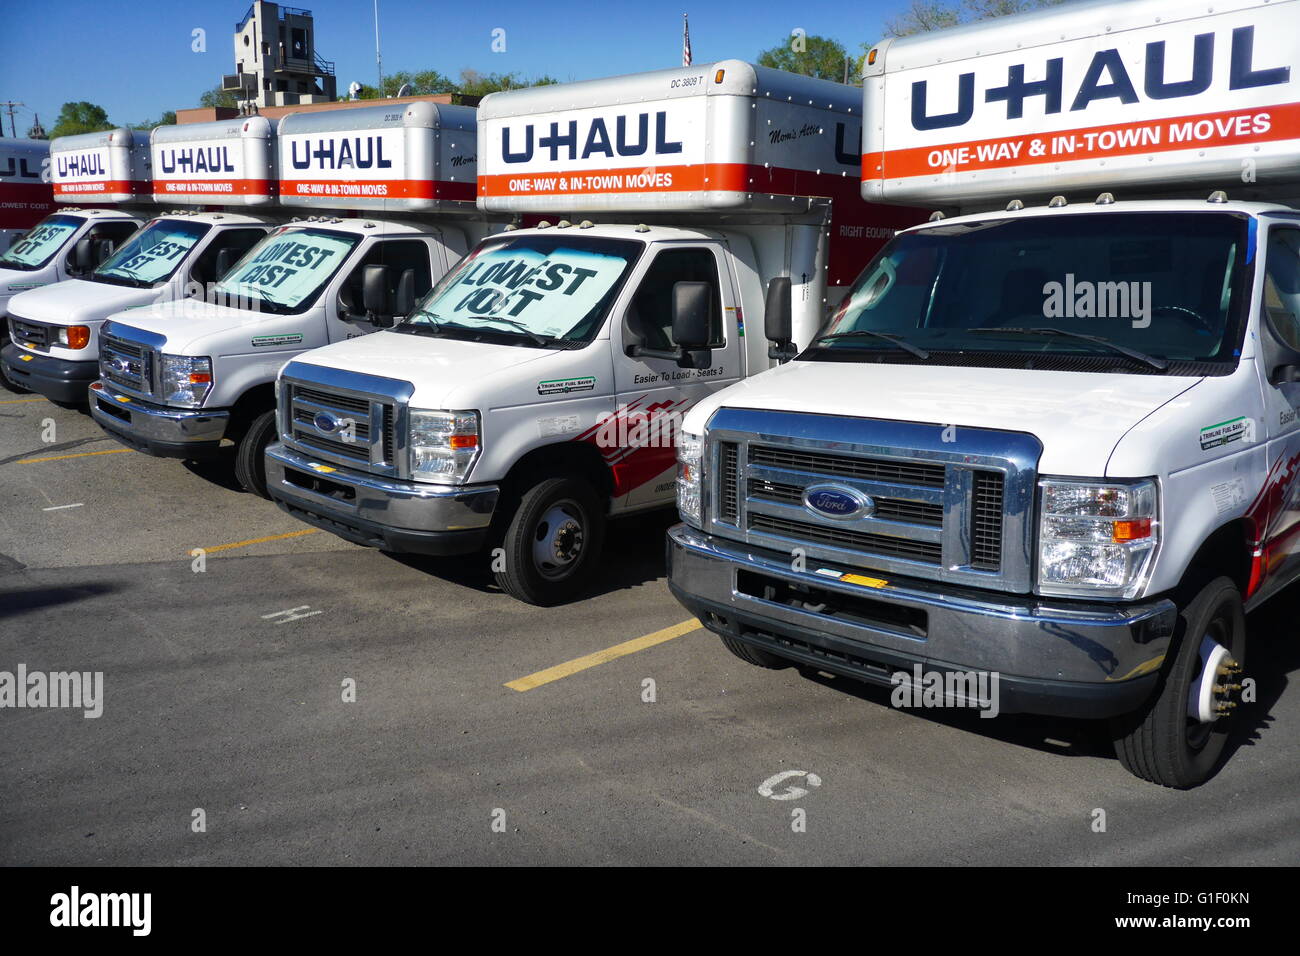 U-Haul self-transportation and storage trucks on a rental lot in suburban Utah. Stock Photo